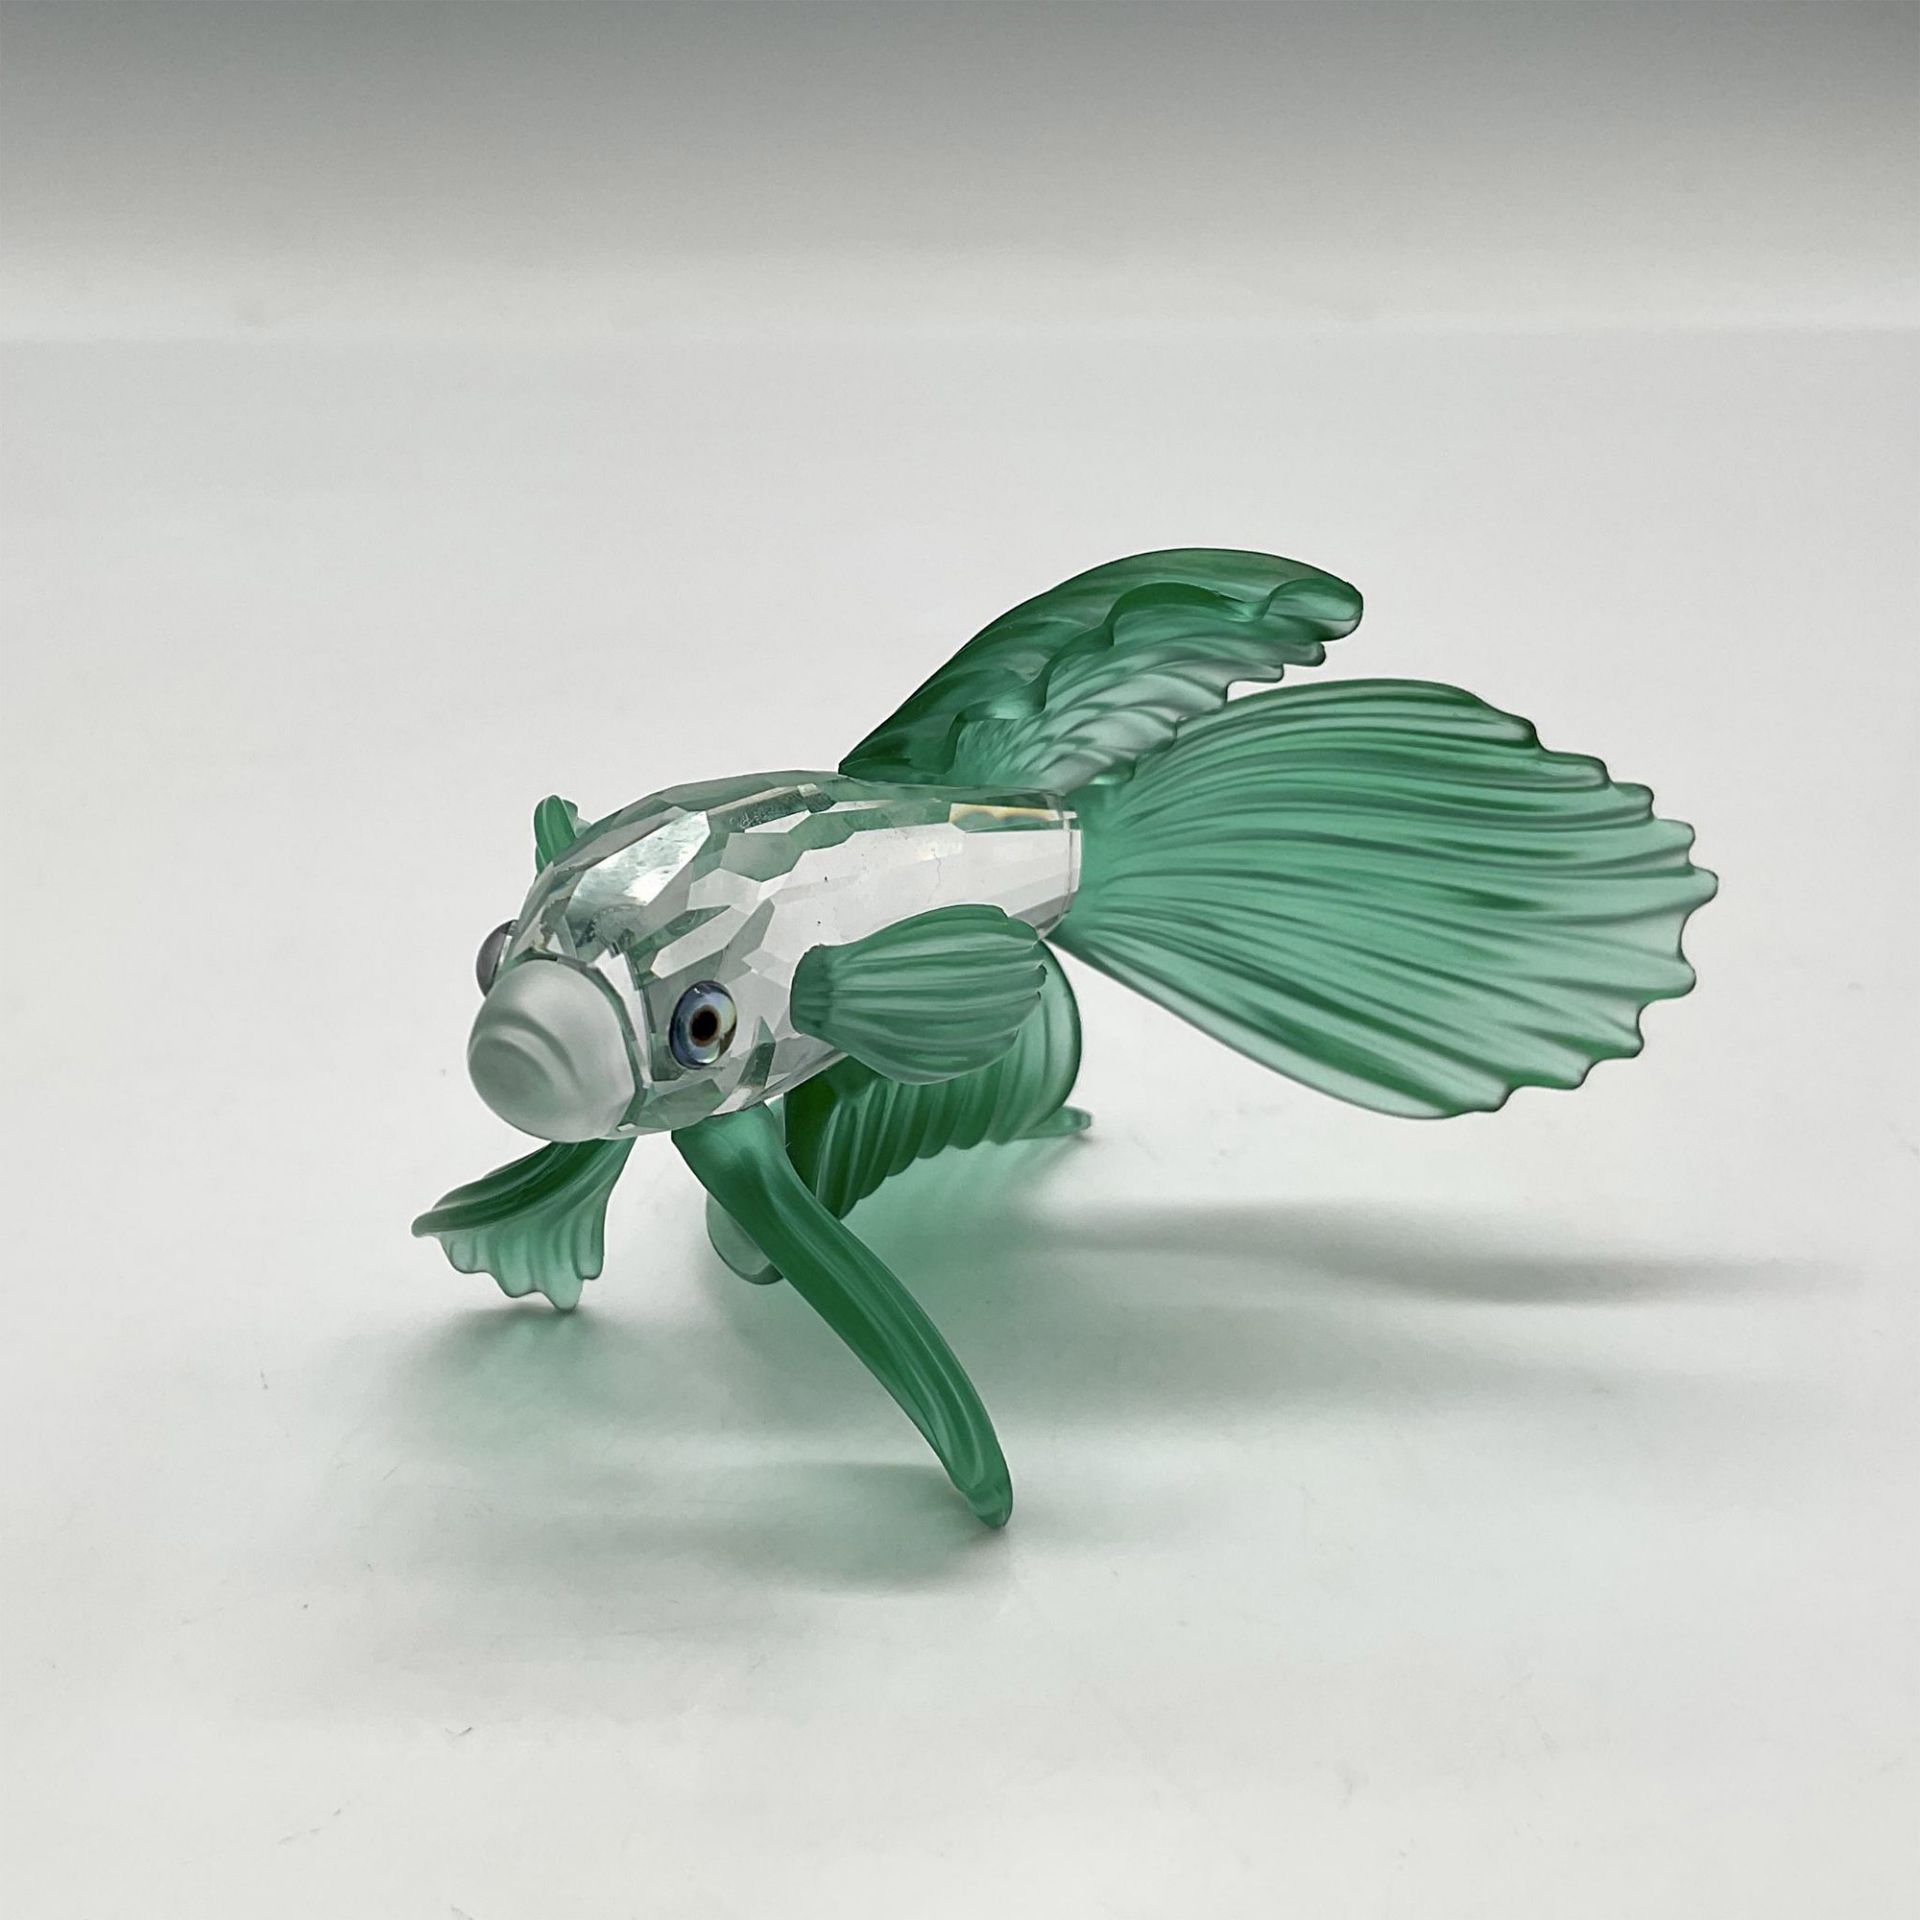 Swarovski Crystal Figurine, Siamese Fighting Fish Green